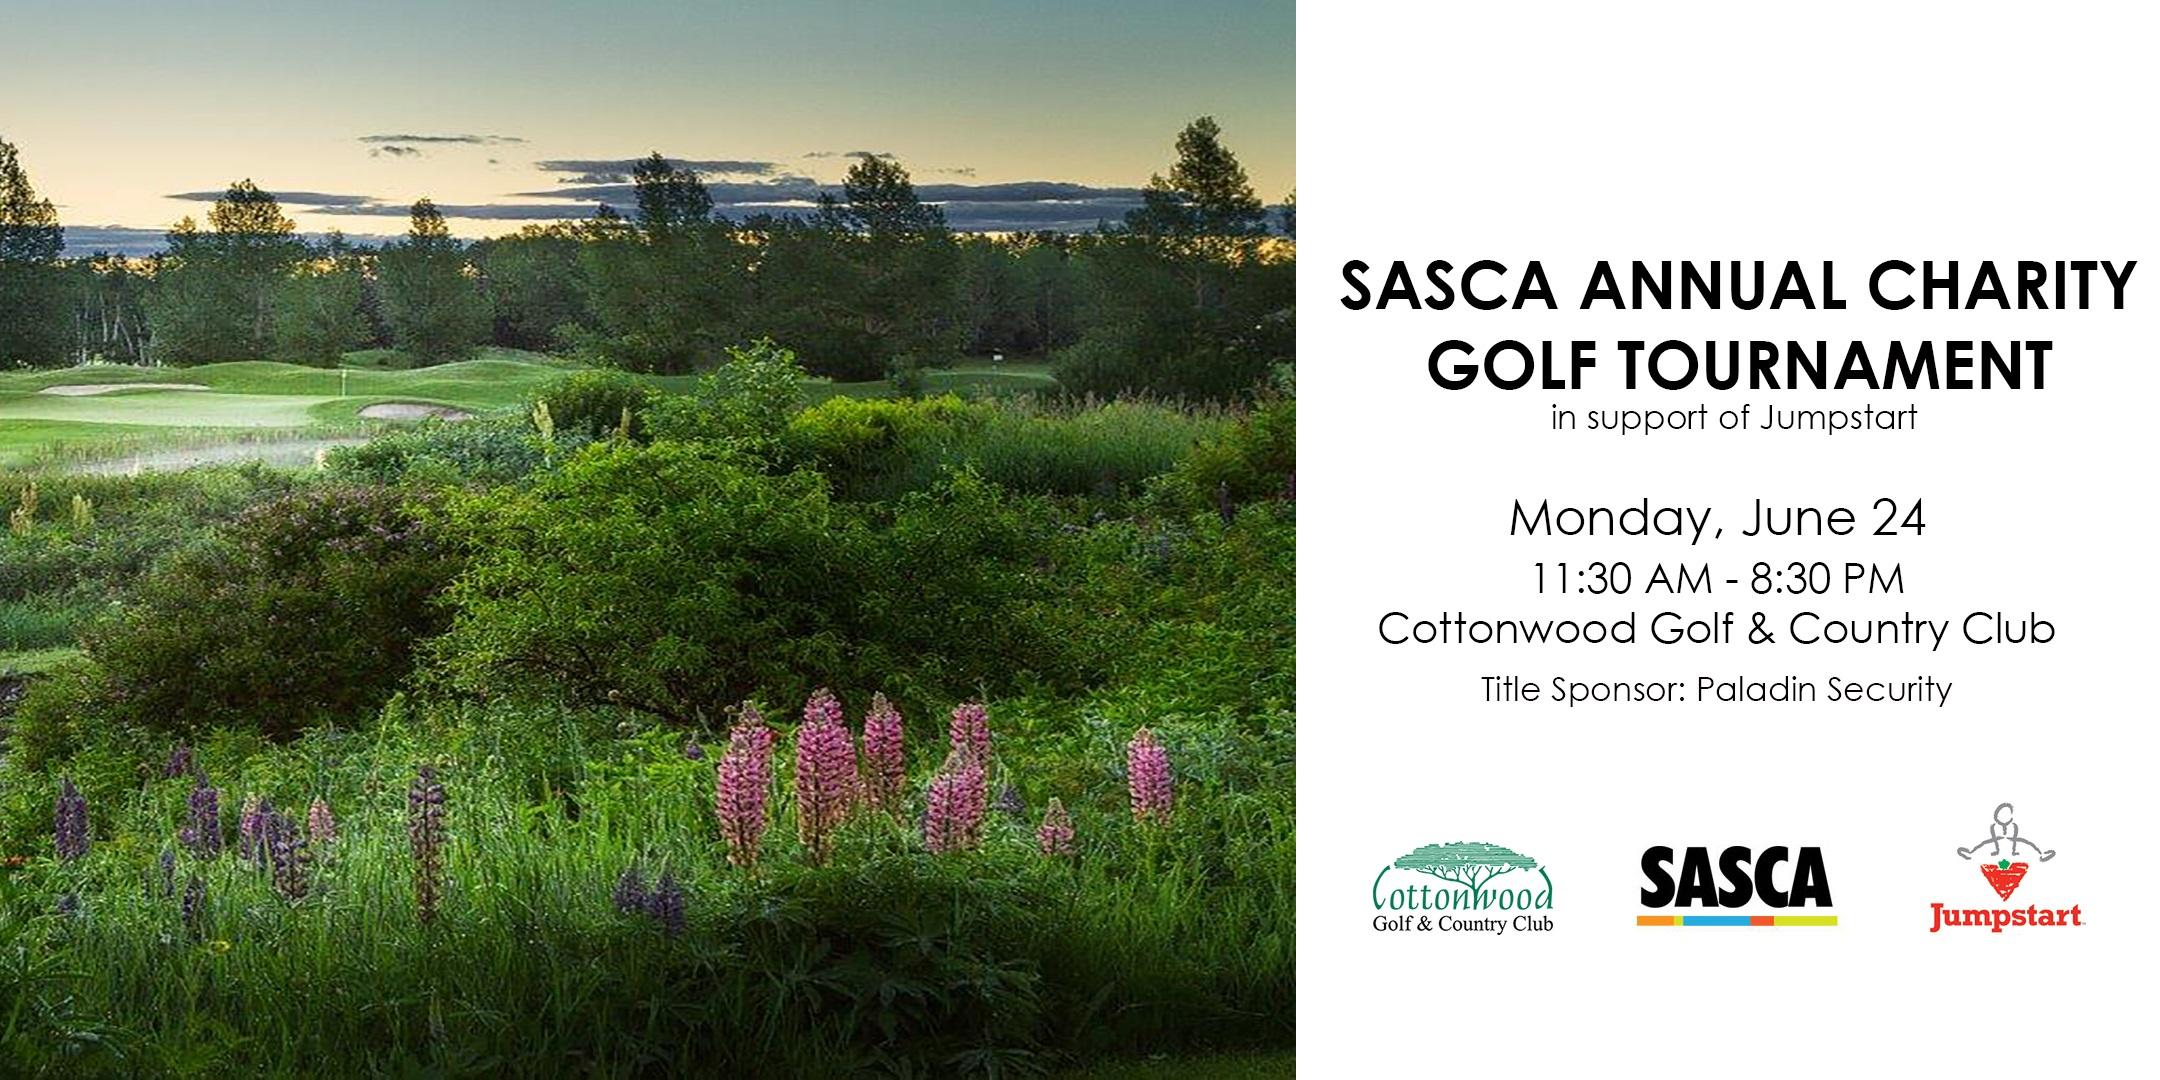 SASCA's Annual Golf Tournament 2019